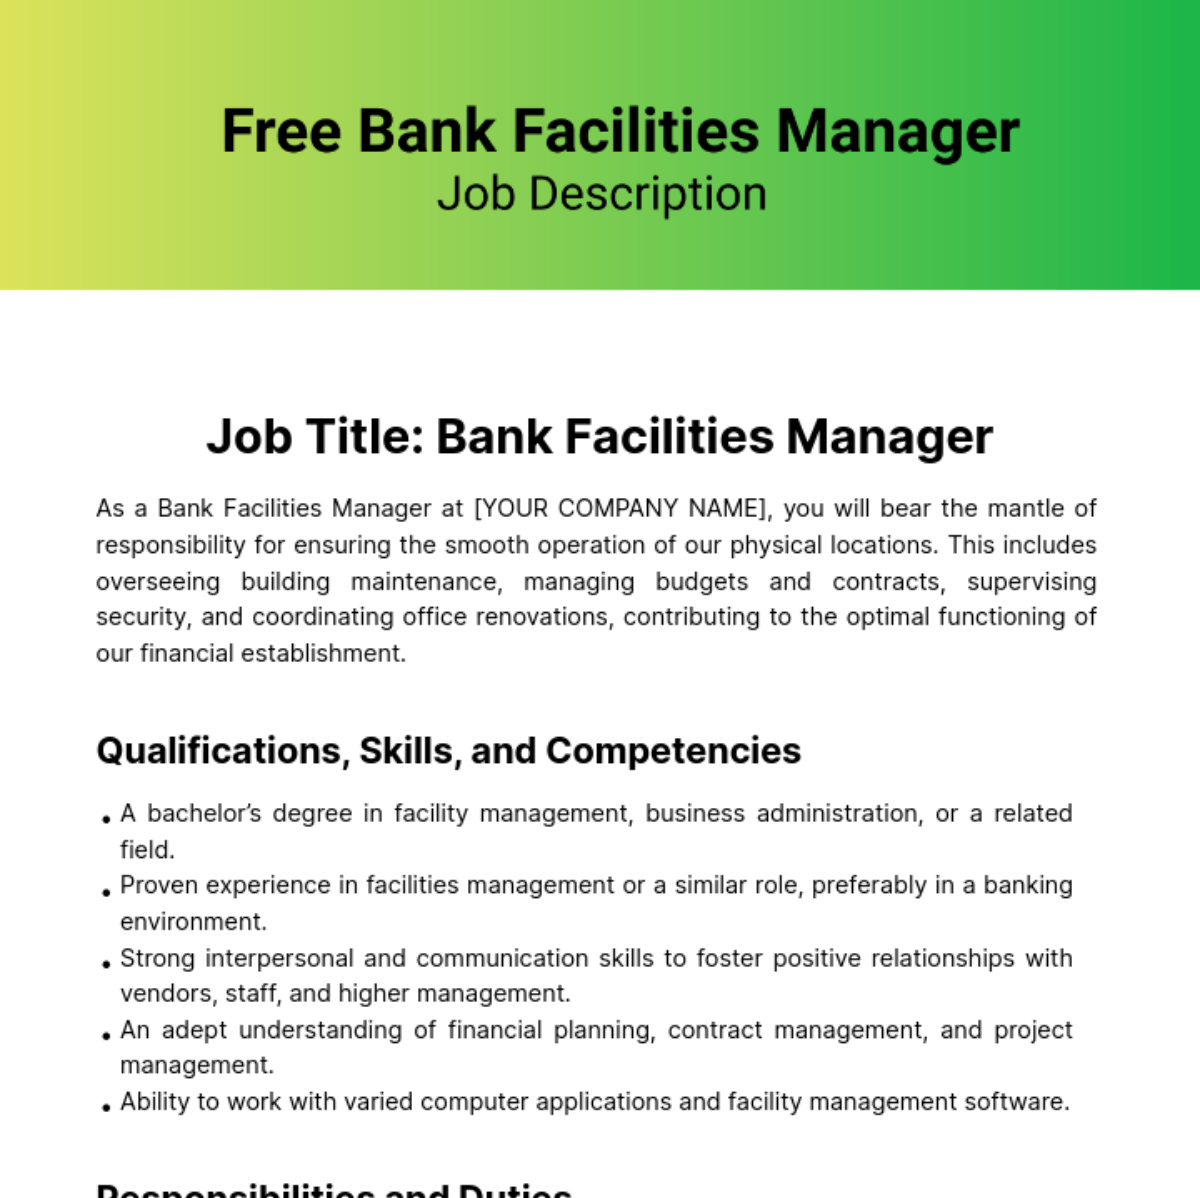 Free Bank Facilities Manager Job Description Template